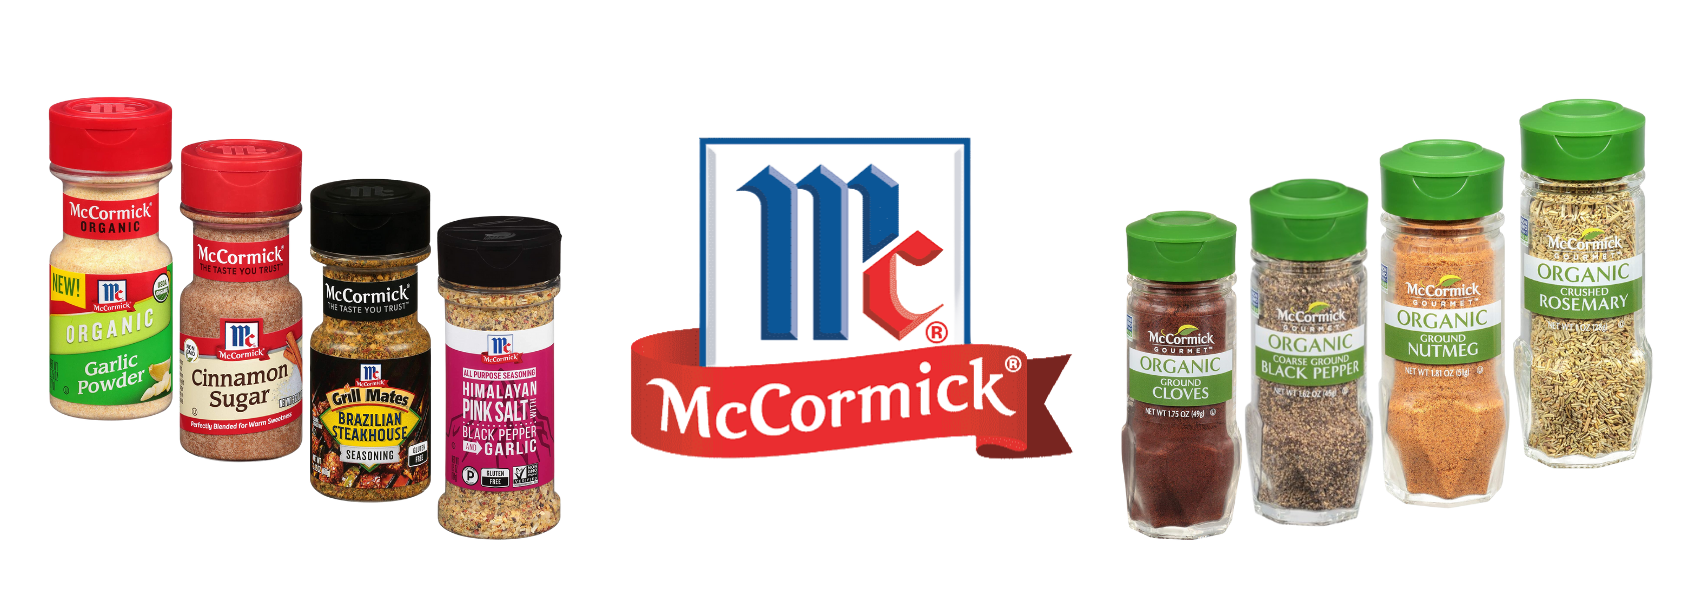 4 pack) McCormick Perfect Pinch Salad Supreme Seasoning, 8.25 oz Mixed  Spices & Seasonings 